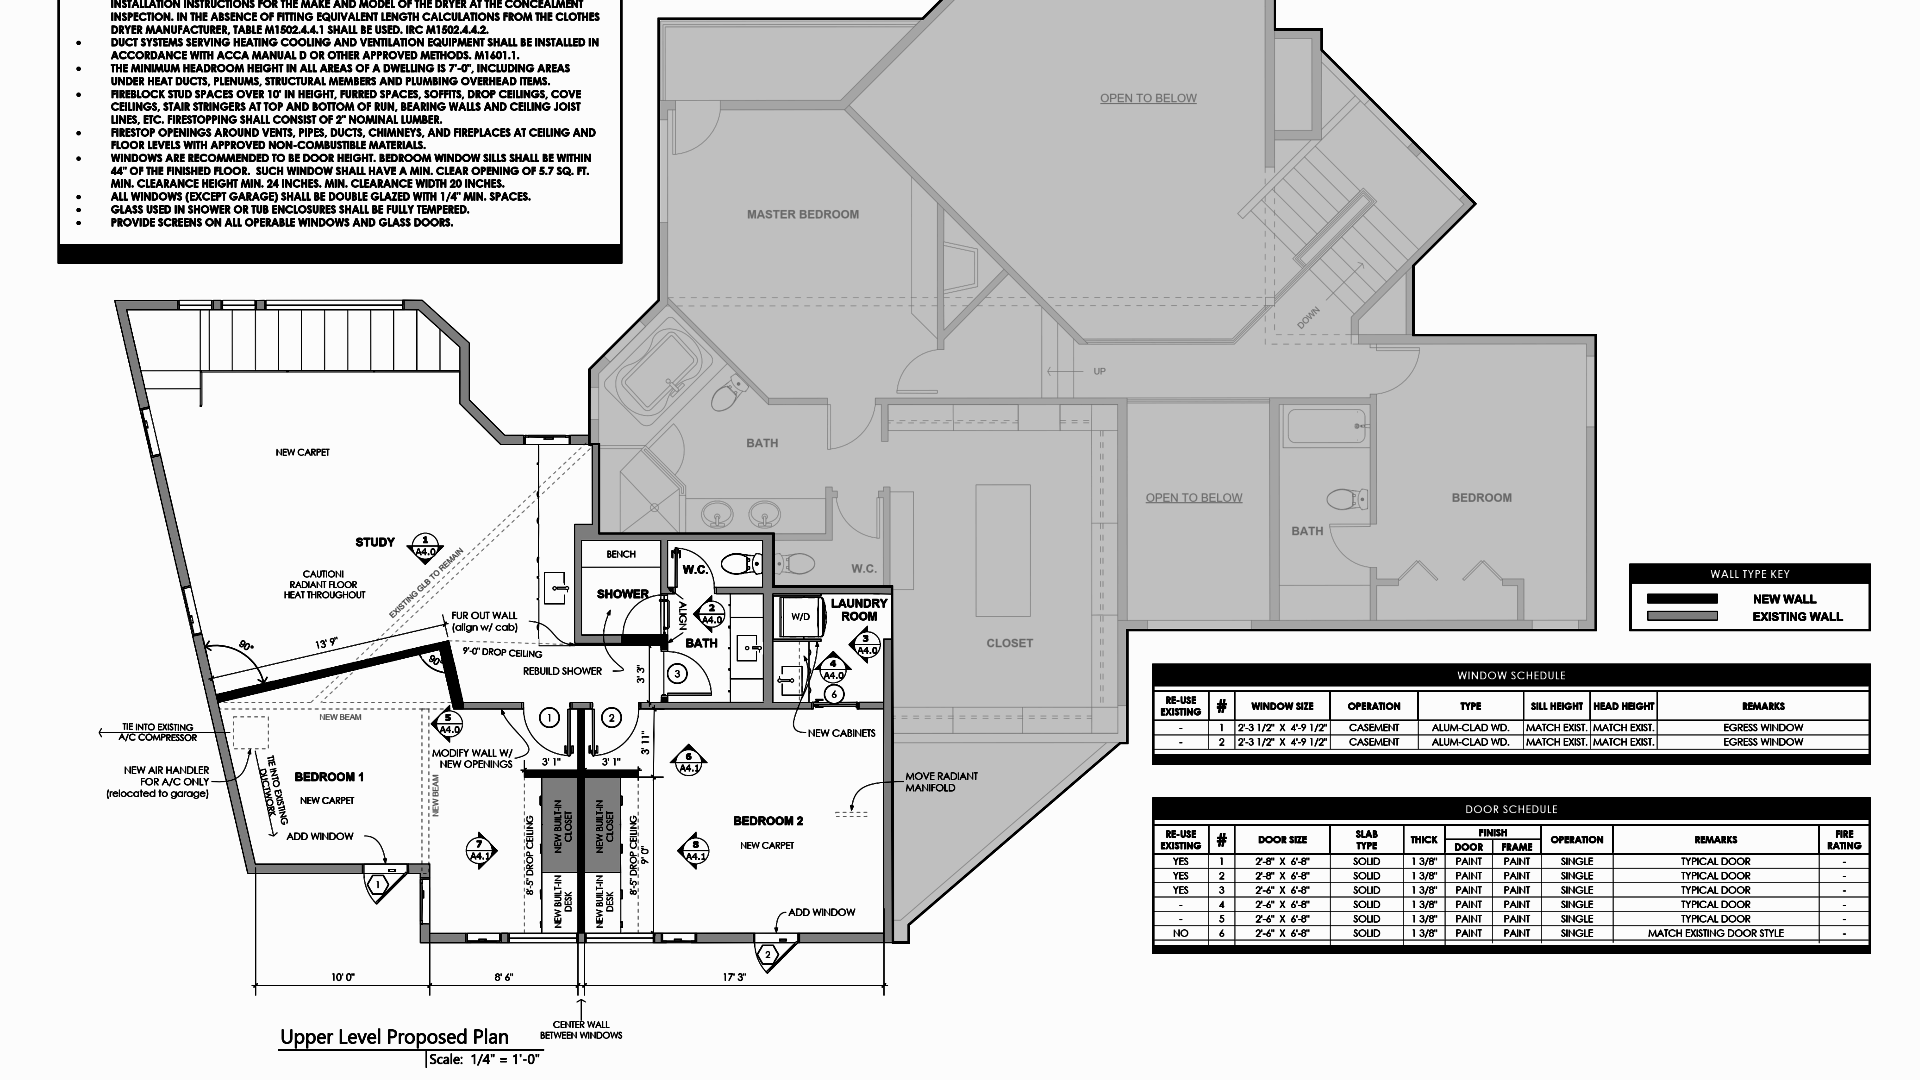 Construction Documents for Building Permit in Park City, Utah by Tarsier 3D Studio